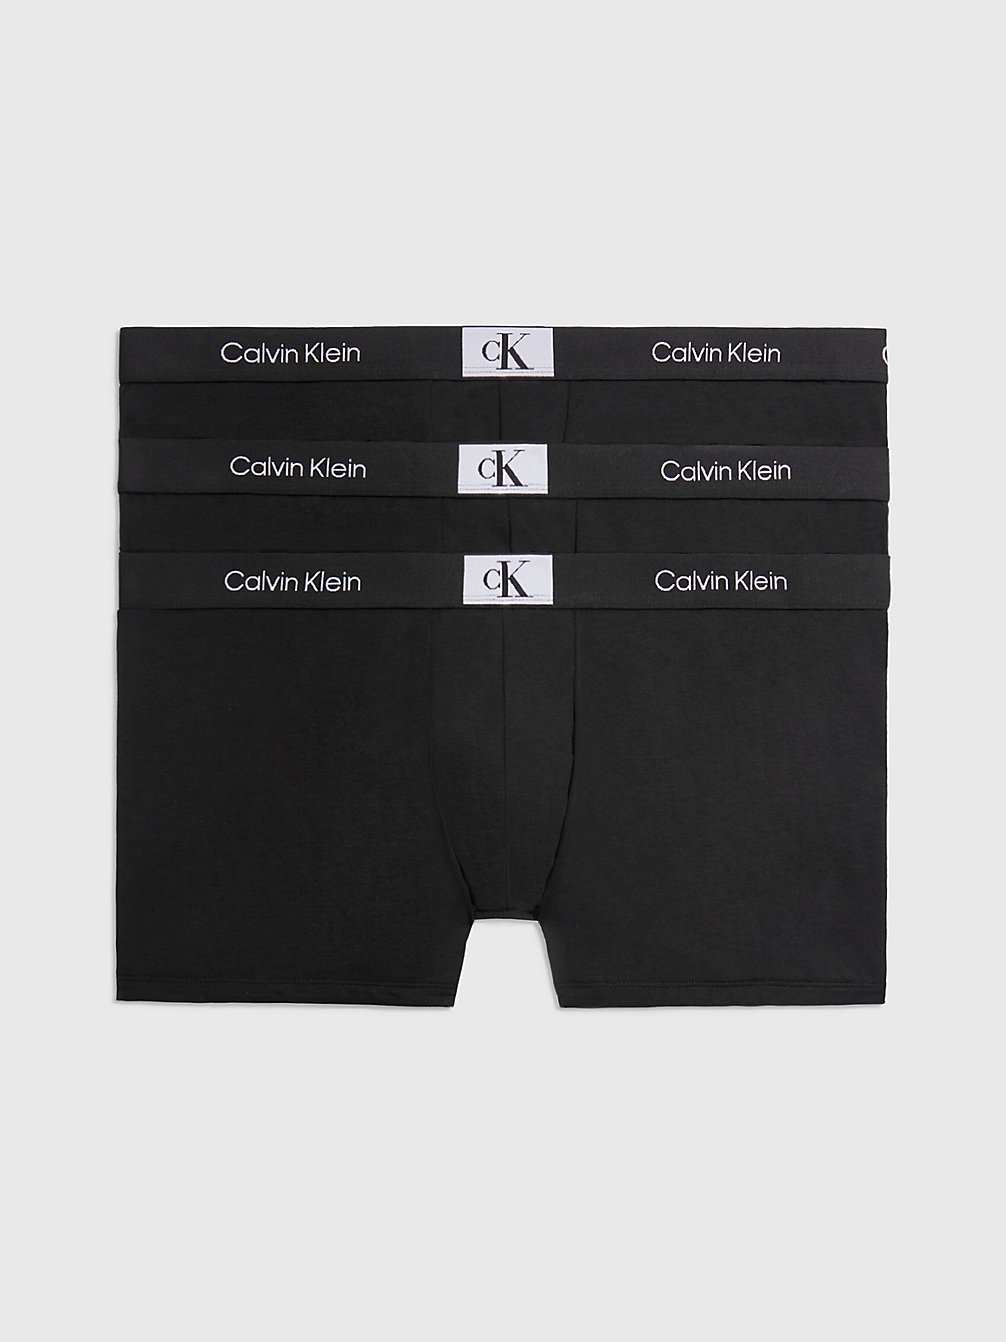 BLACK/ BLACK/ BLACK 3-Er Pack Trunks In Übergröße - Ck96 undefined Herren Calvin Klein